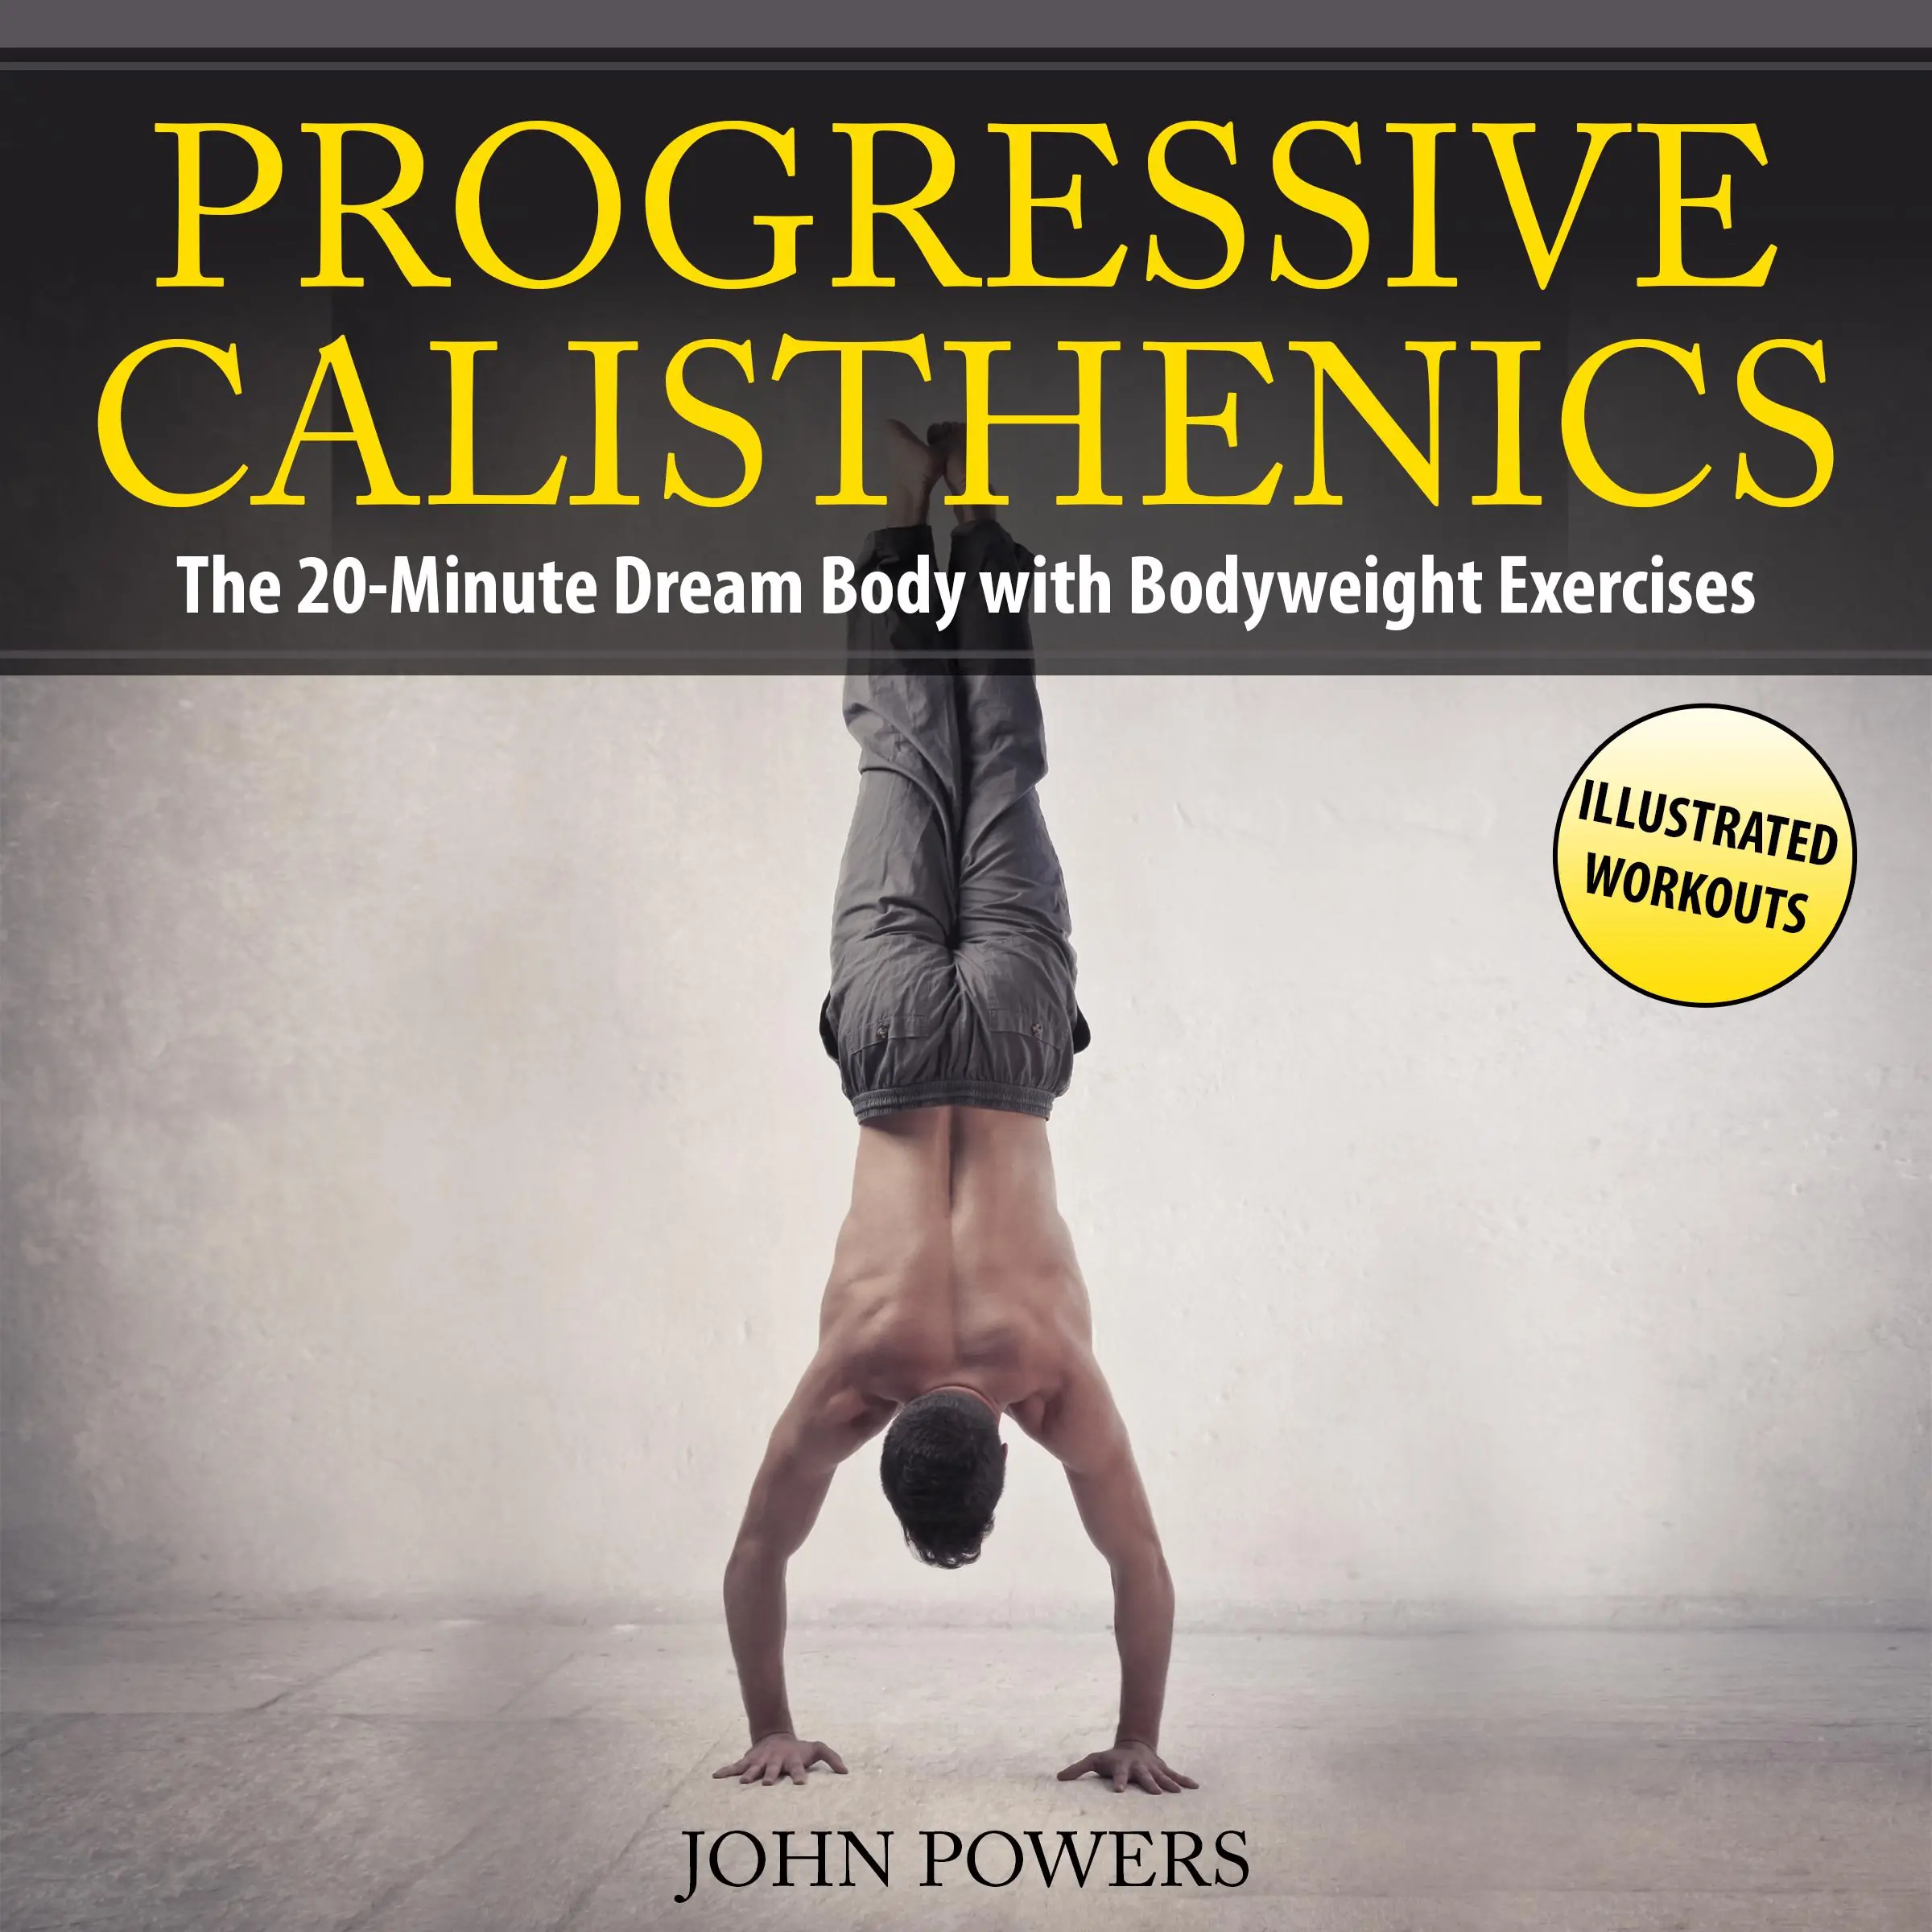 Progressive Calisthenics: The 20-Minute Dream Body with Bodyweight Exercises and Calisthenics by John Powers Audiobook